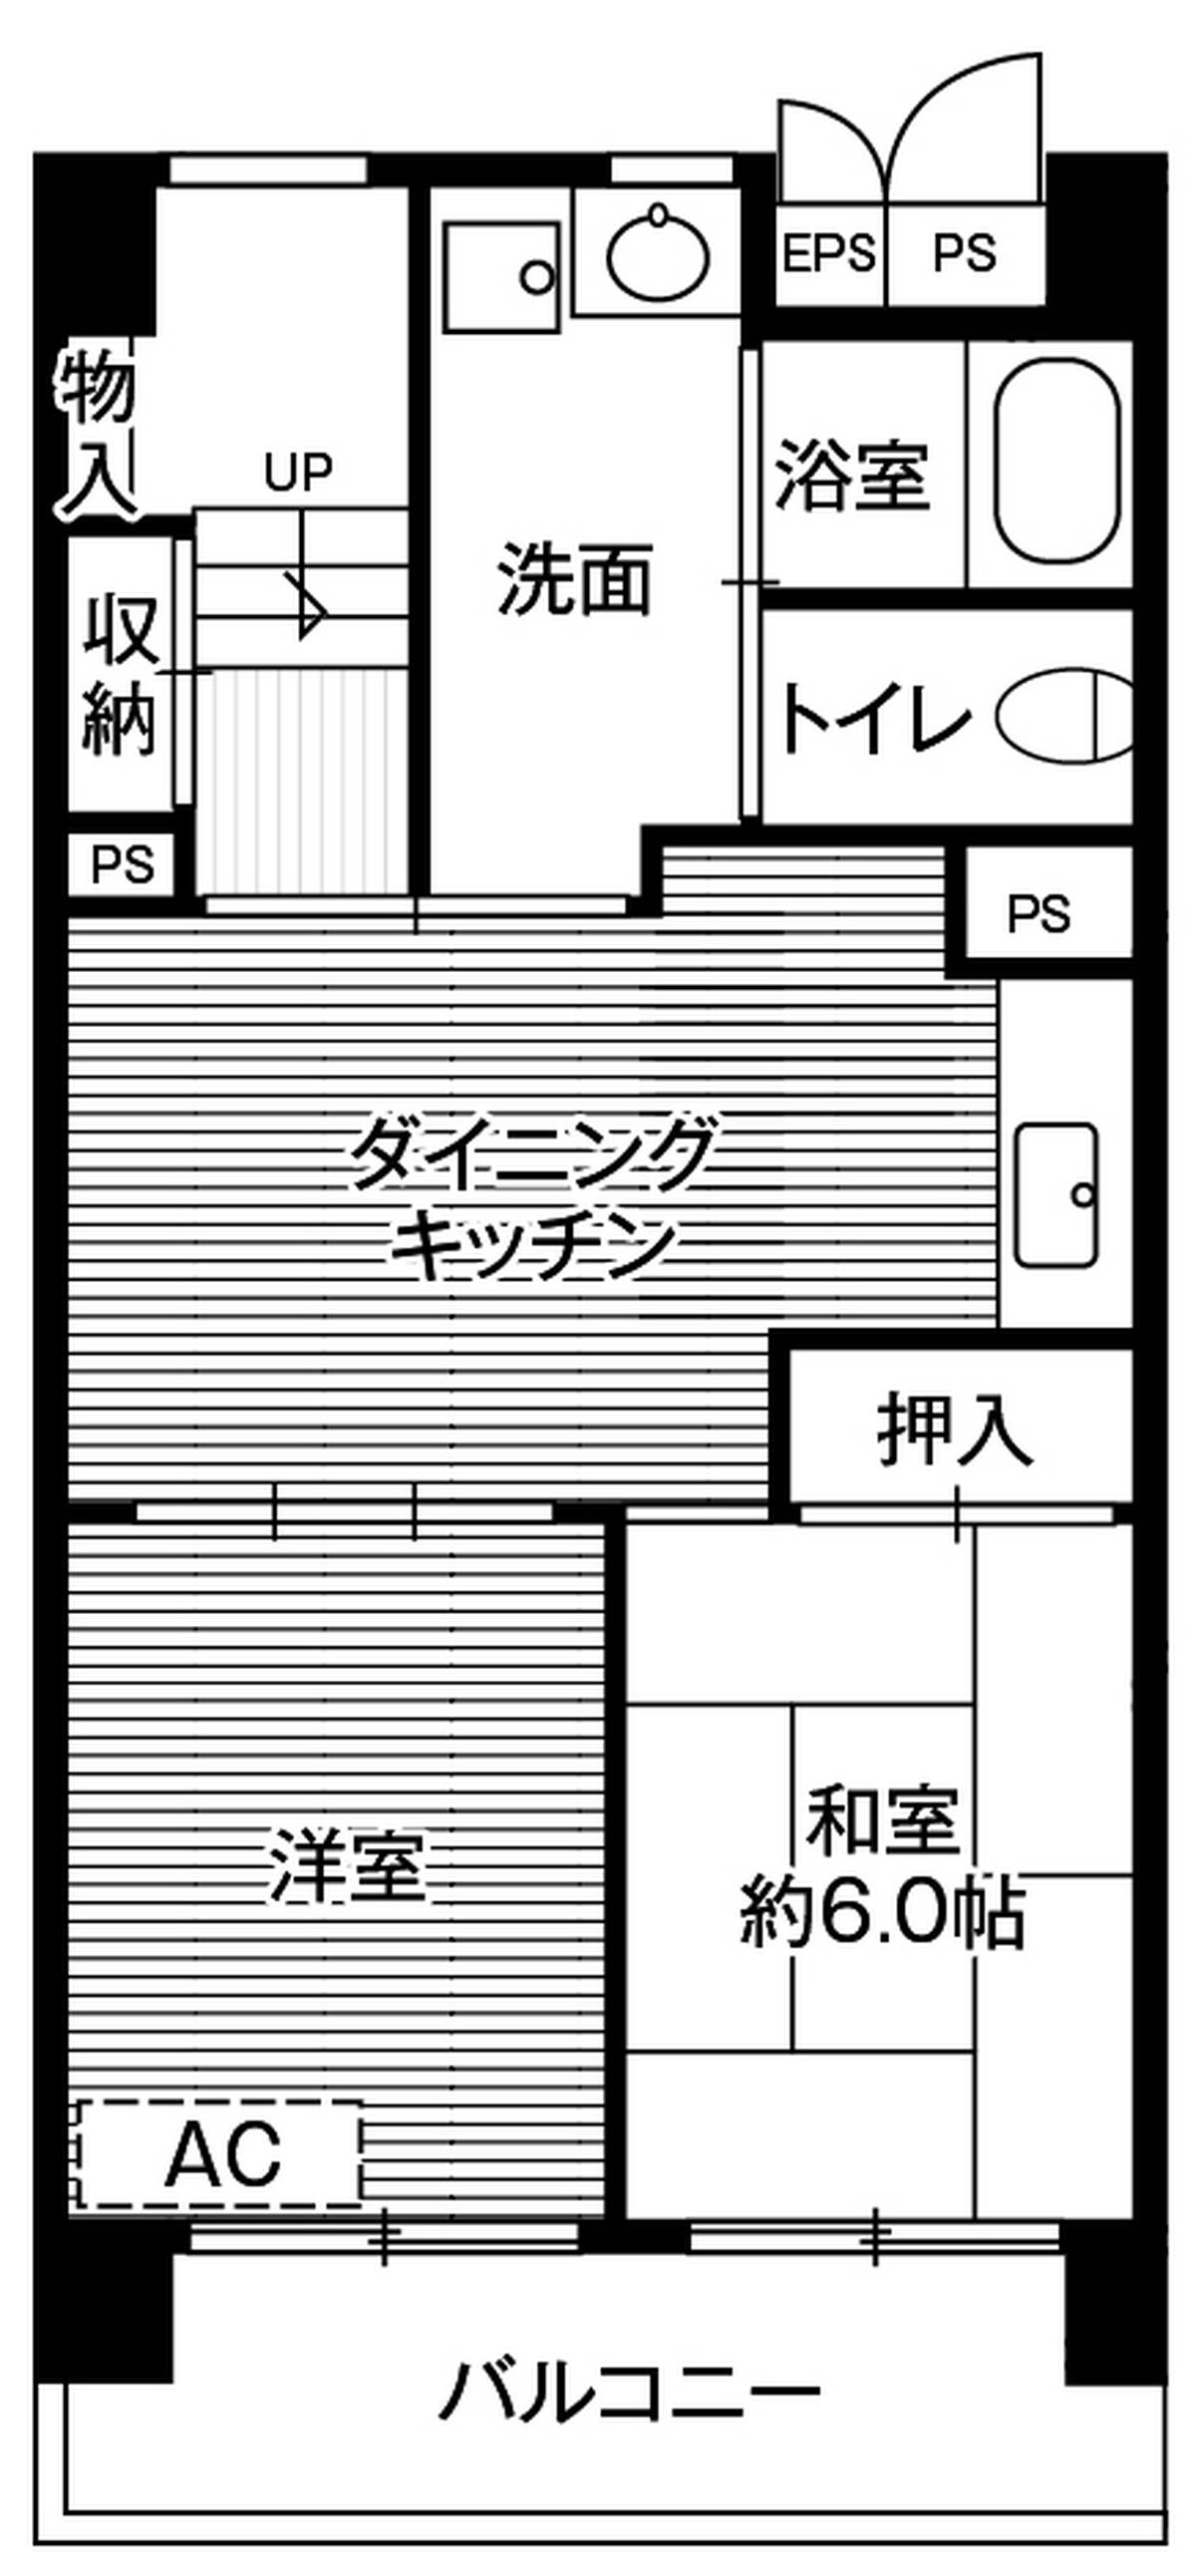 2LDK floorplan of Village House Narita Azuma Tower in Narita-shi